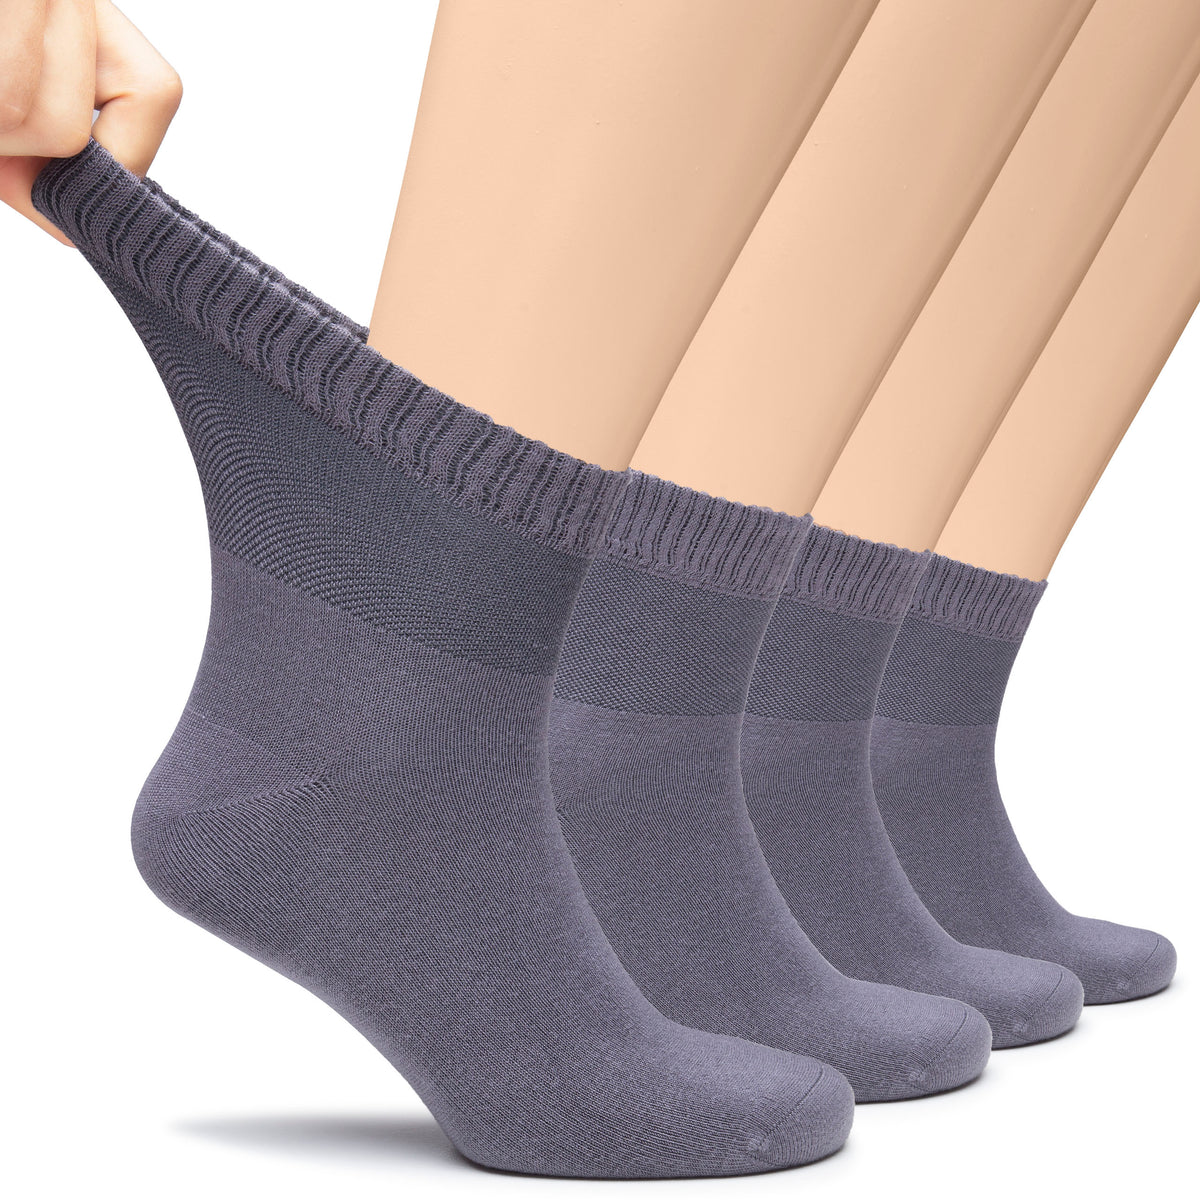 Hugh Ugoli Lightweight Men's Diabetic Ankle Socks Bamboo Thin Socks Seamless Toe and Non-Binding Top, 4 Pairs, Shoe Size 8-11/11-13 | Shoe Size: 8-11 | Dark Grey